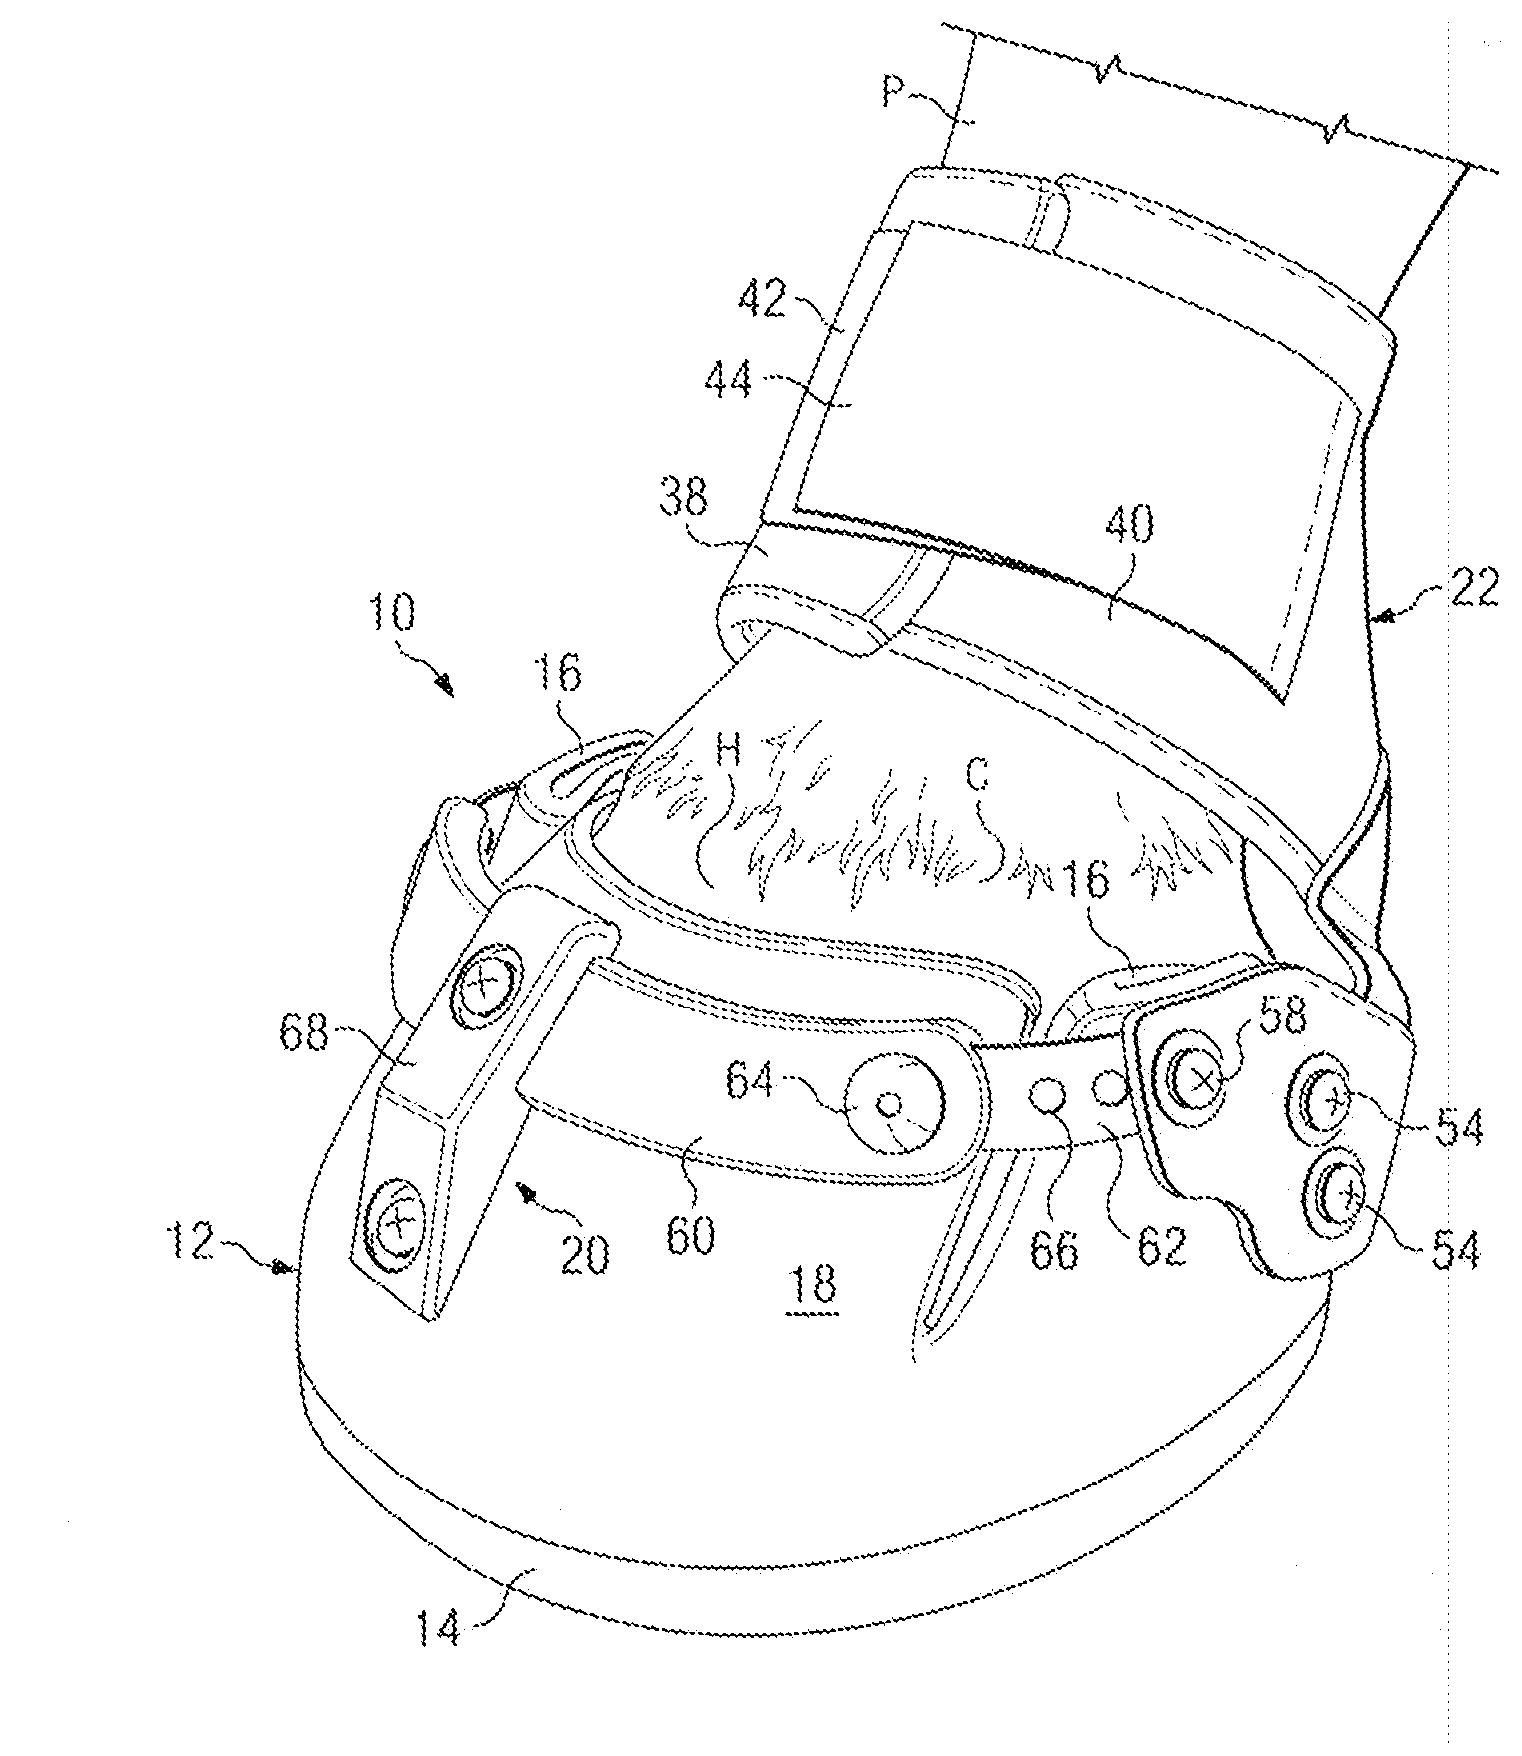 Horse boot with elastic fastener